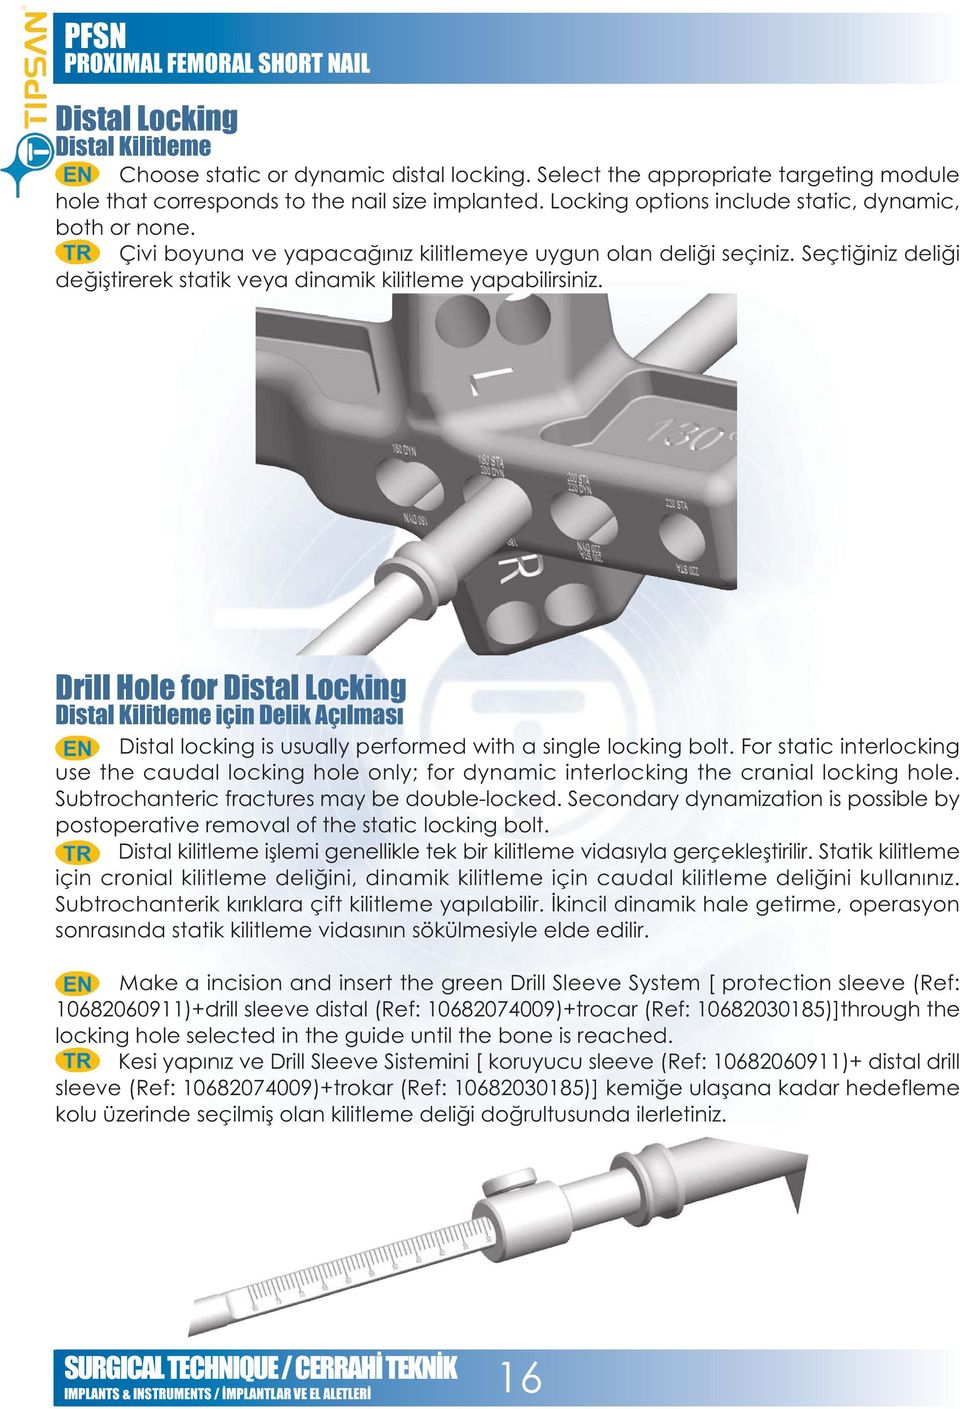 Drill Hole for Distal Locking Distal Kilitleme için Delik Açýlmasý Distal locking is usually performed with a single locking bolt.